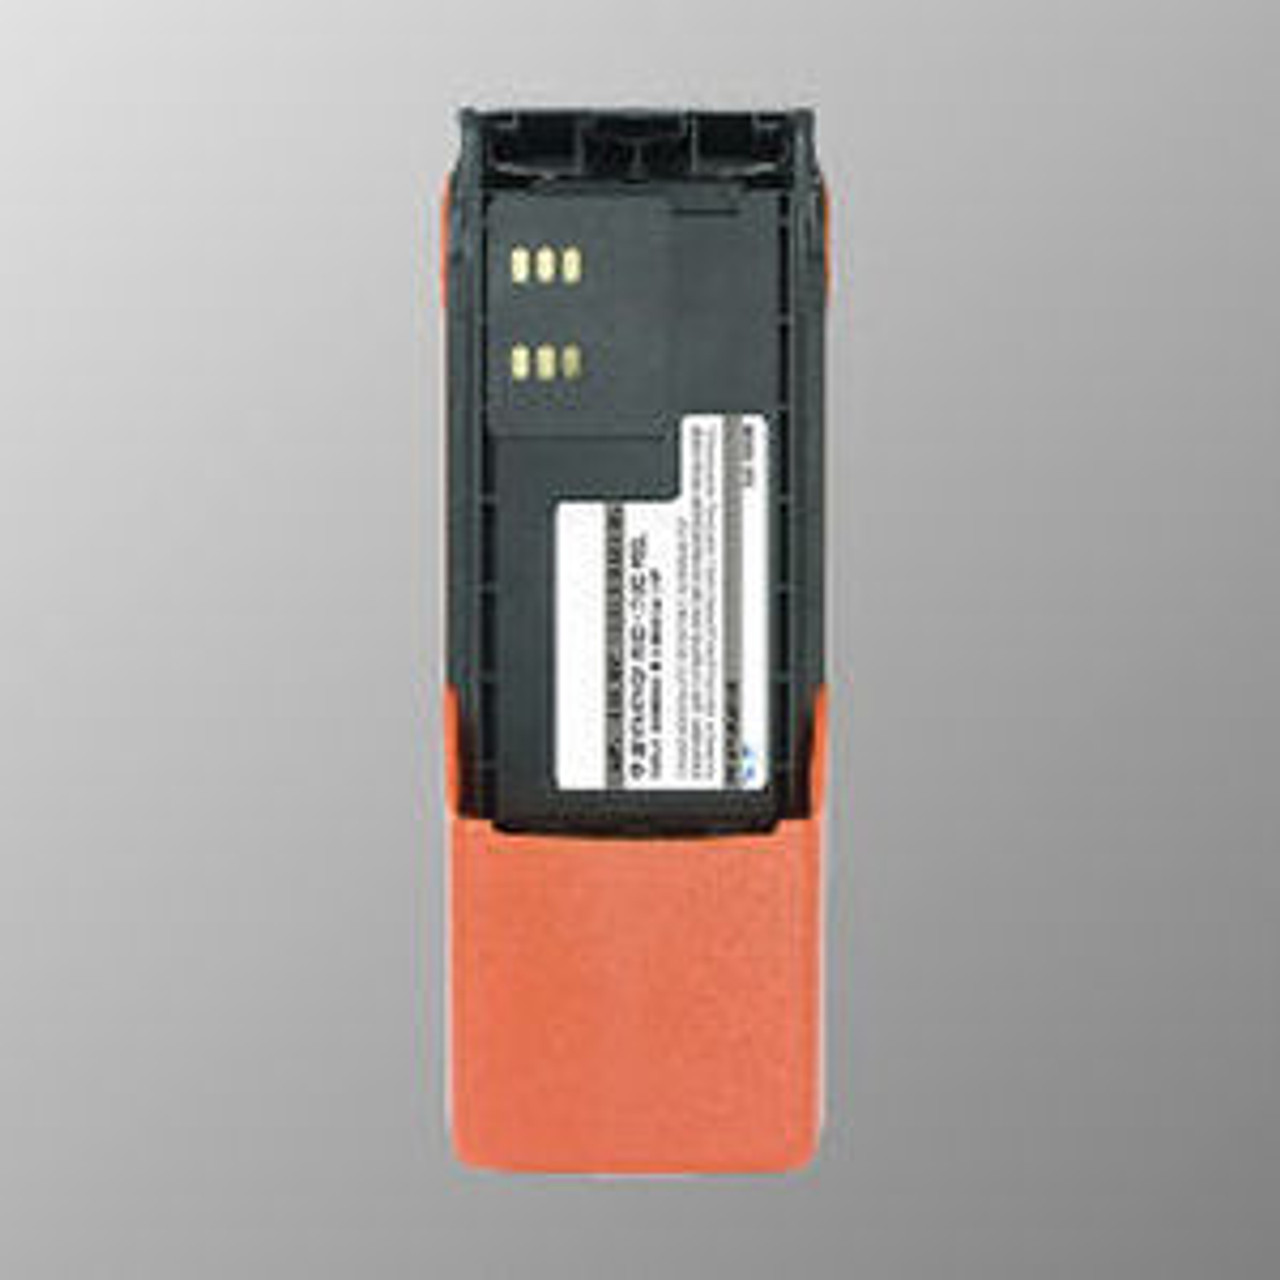 Motorola MTX960 Clamshell - Orange